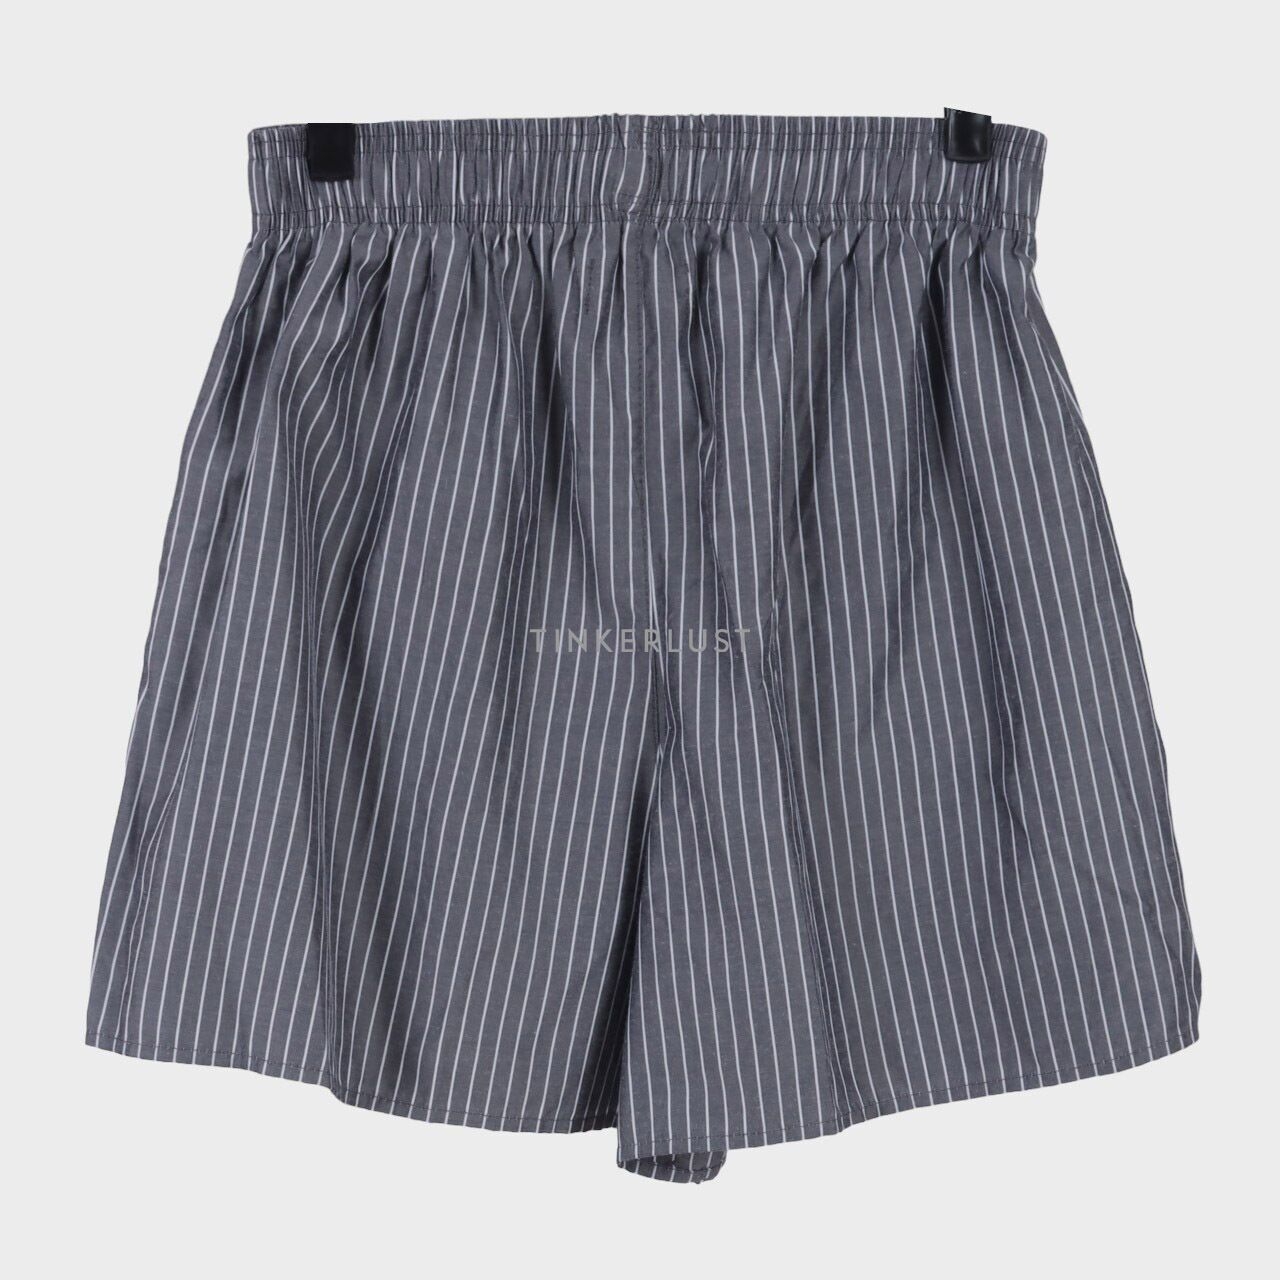 ecinos Grey Stripes Short Pants